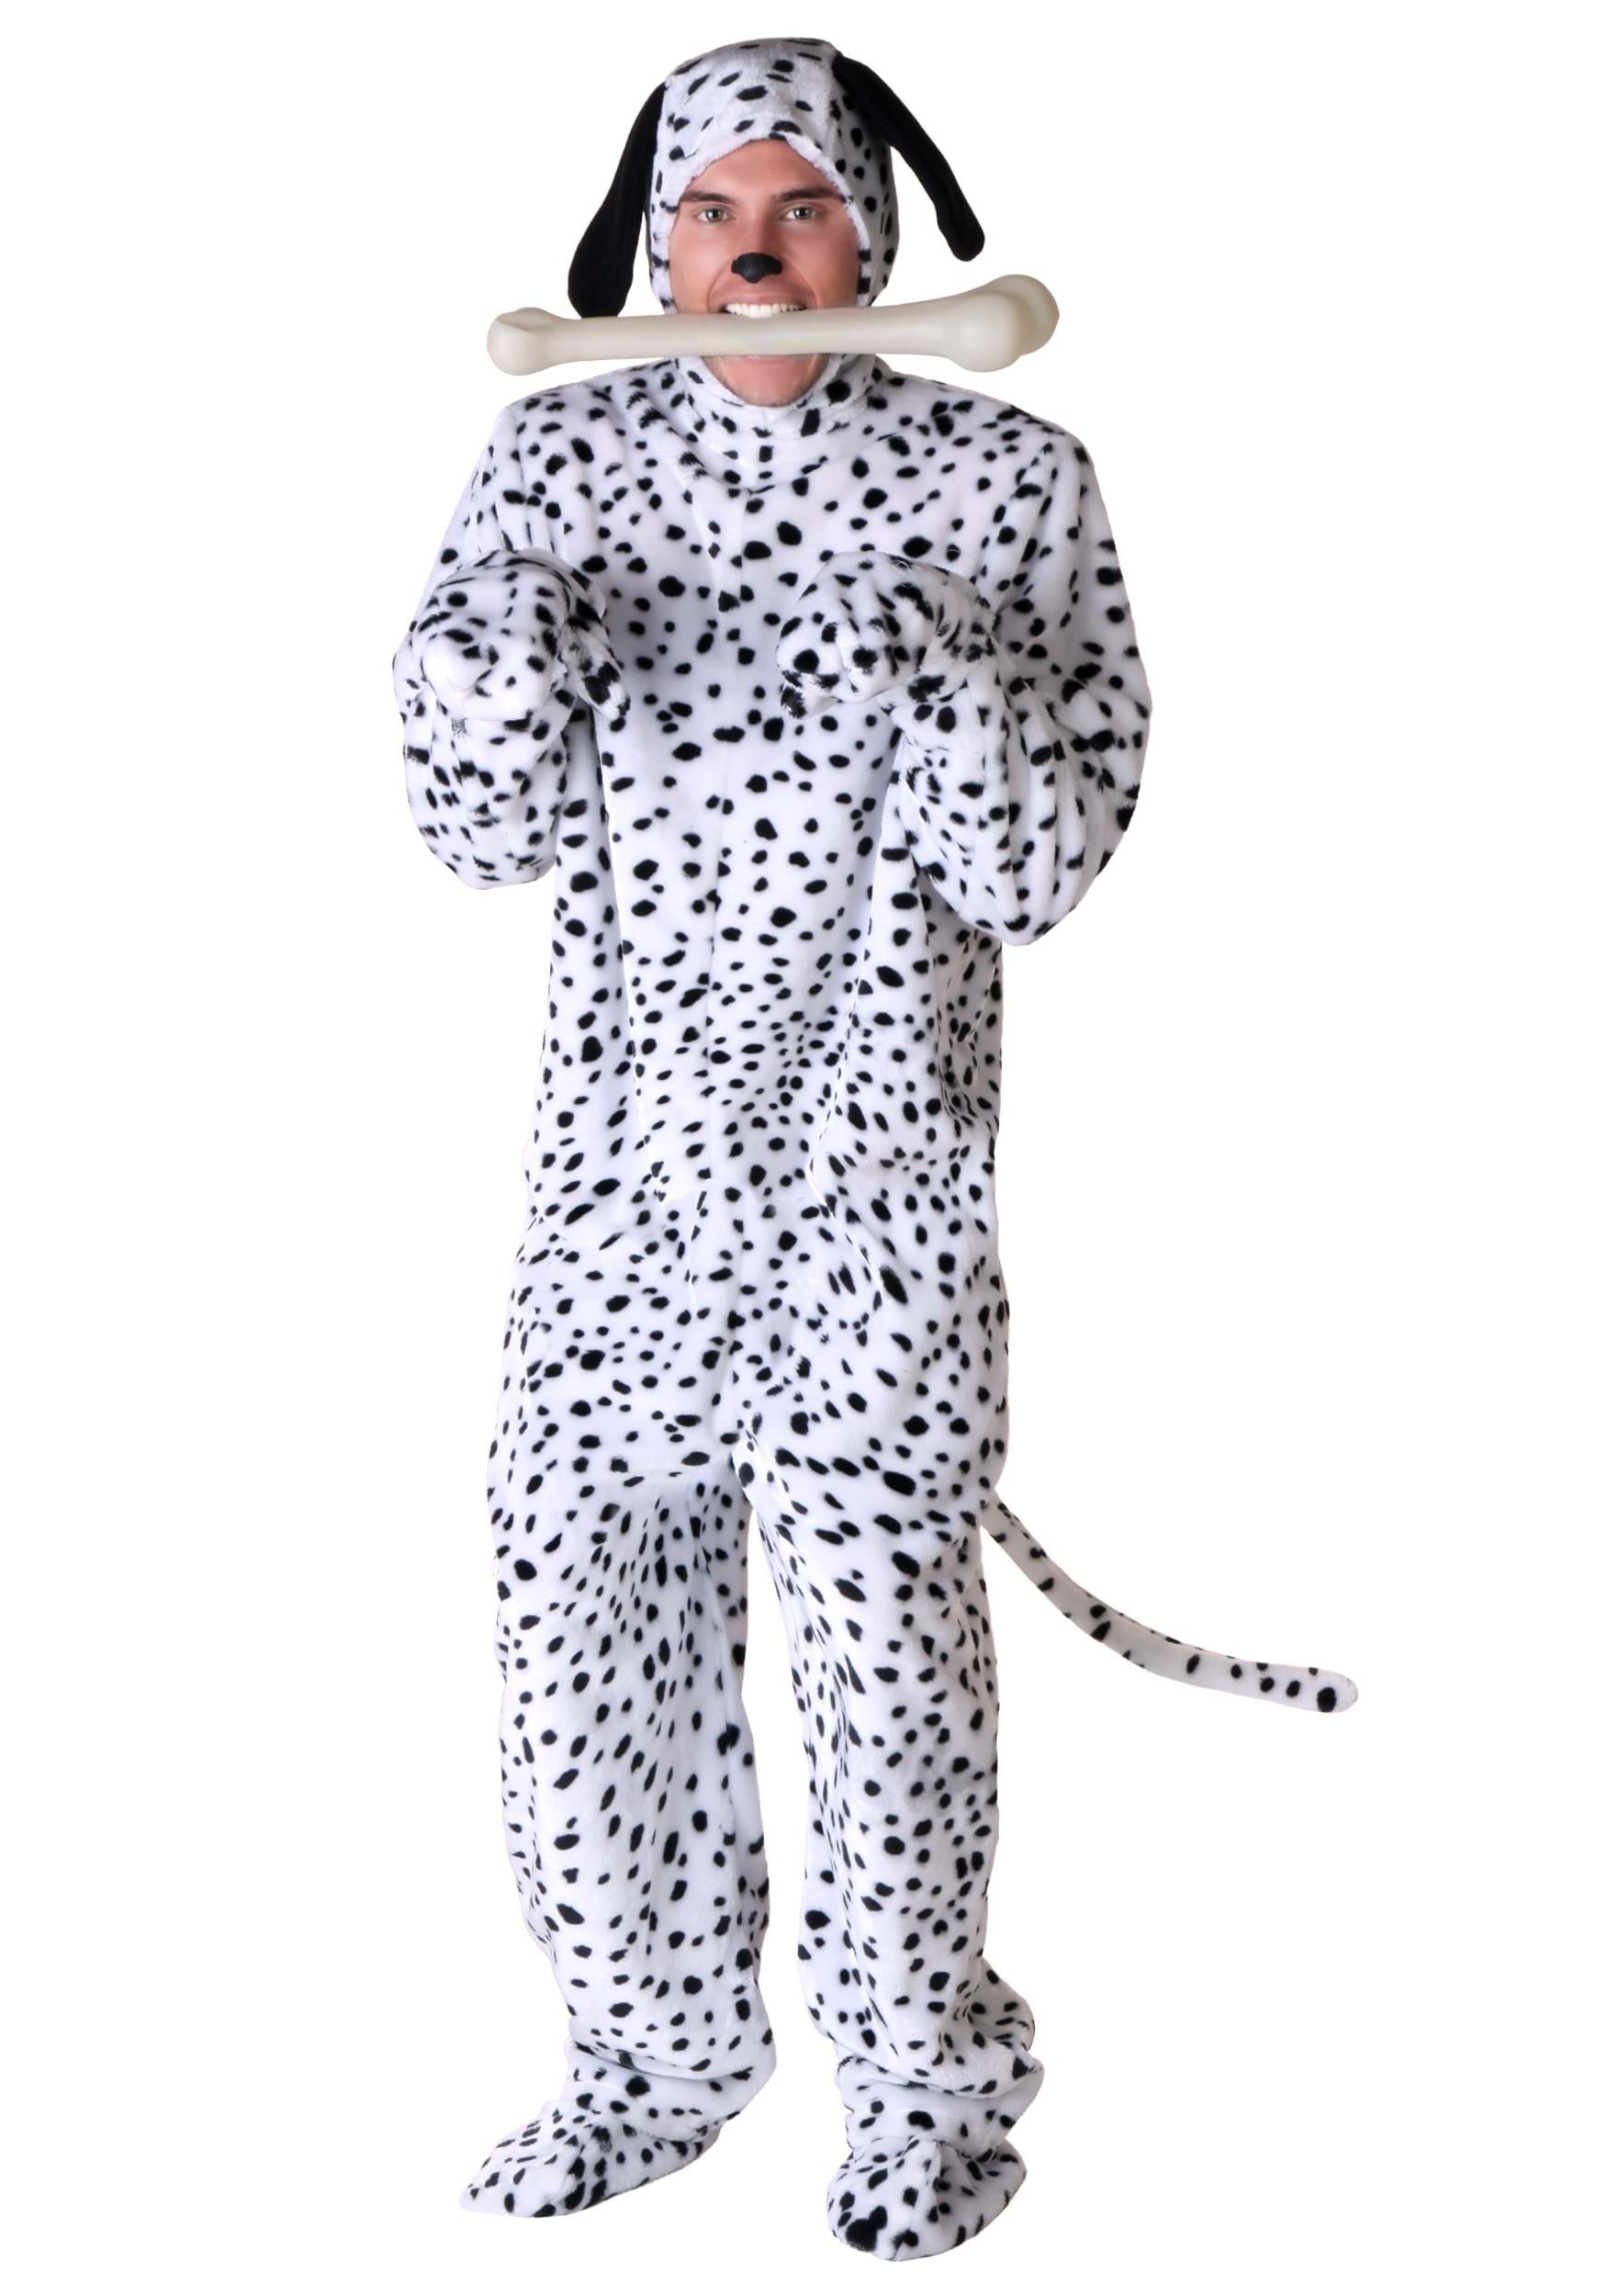 Dalmatian Dog Costume For Adults